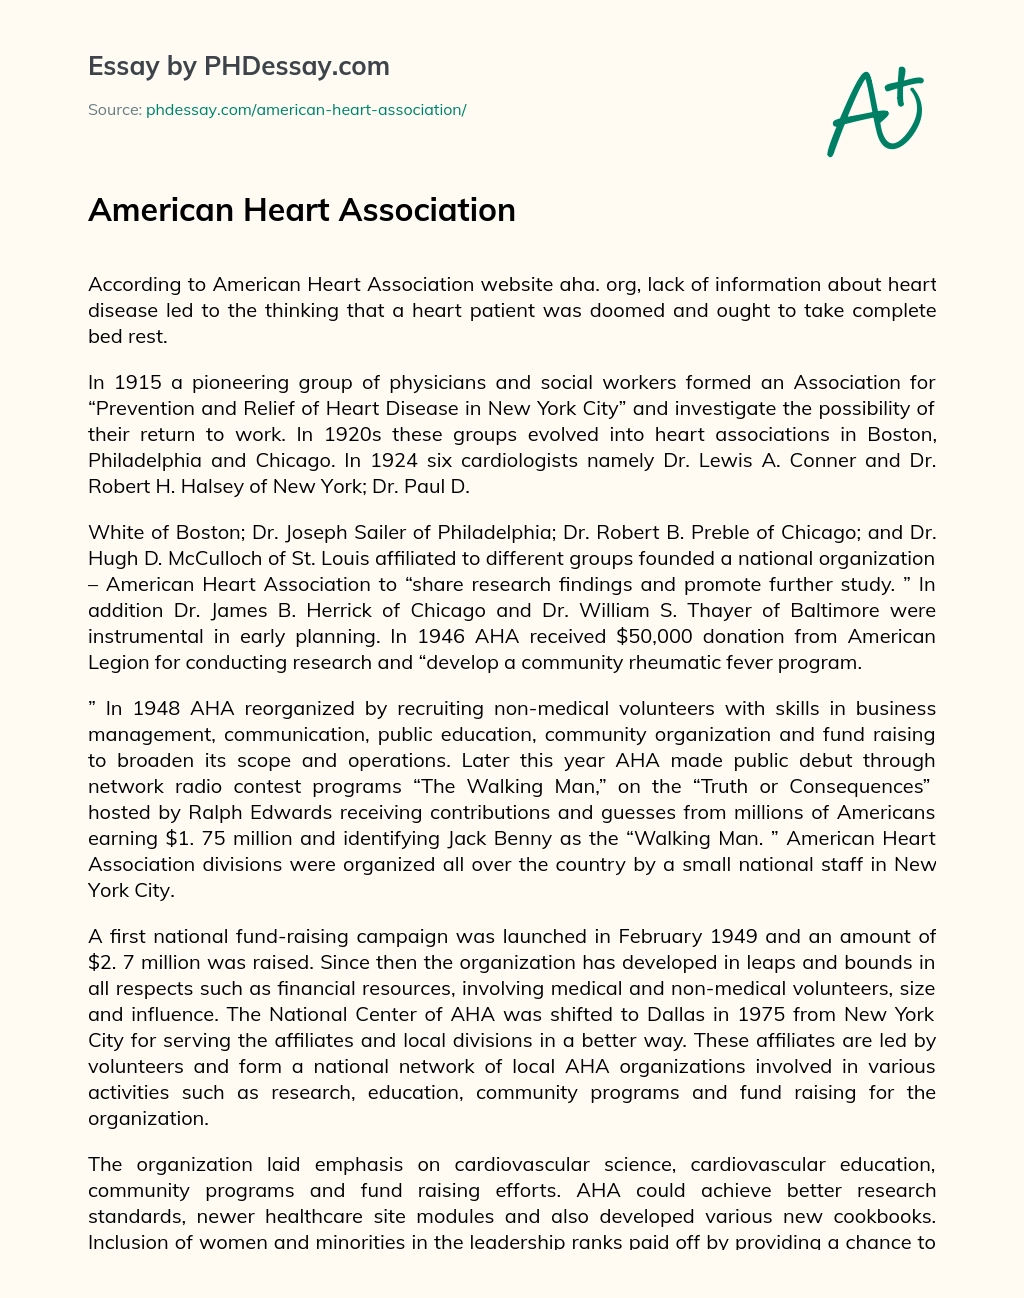 American Heart Association essay